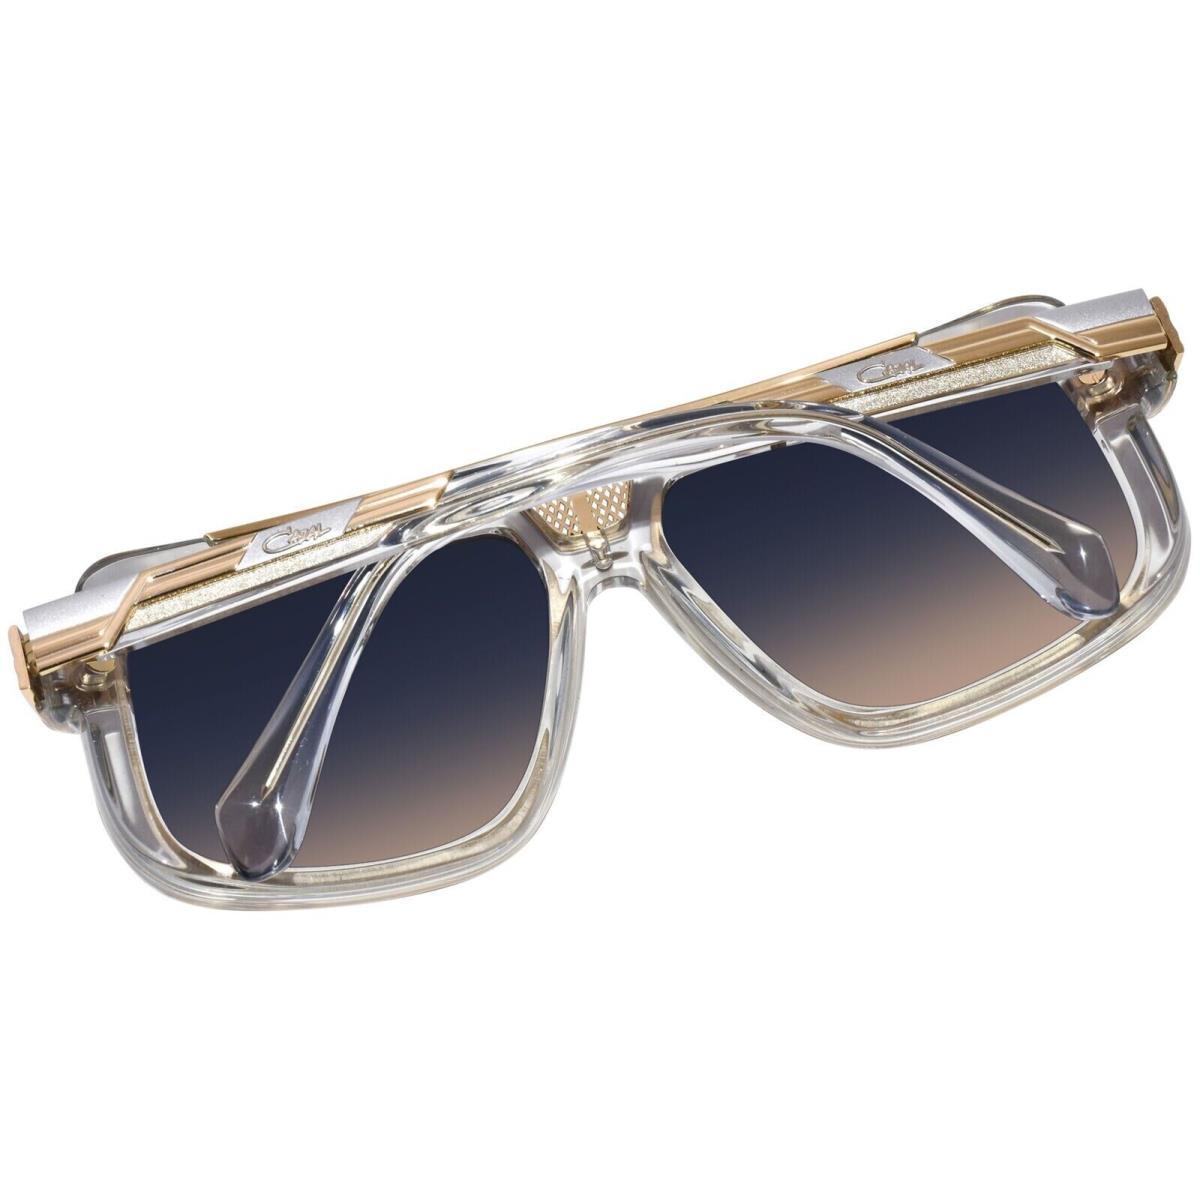 Cazal sunglasses  - Crystal/Gold Frame, Gray Lens